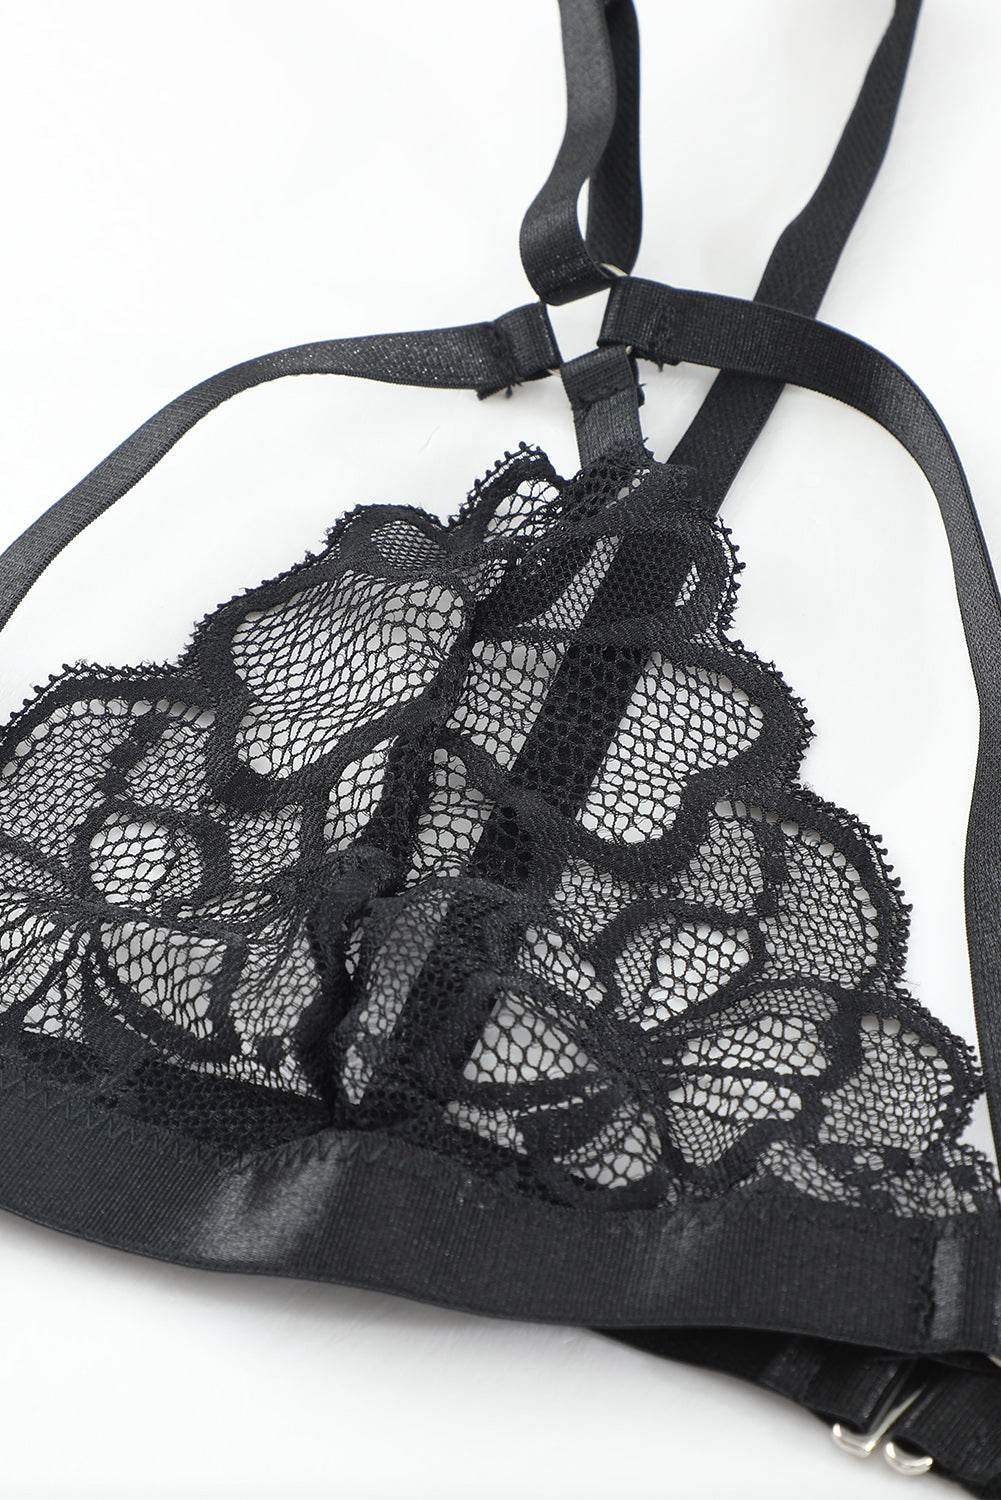 a black bra with a black ribbon around it